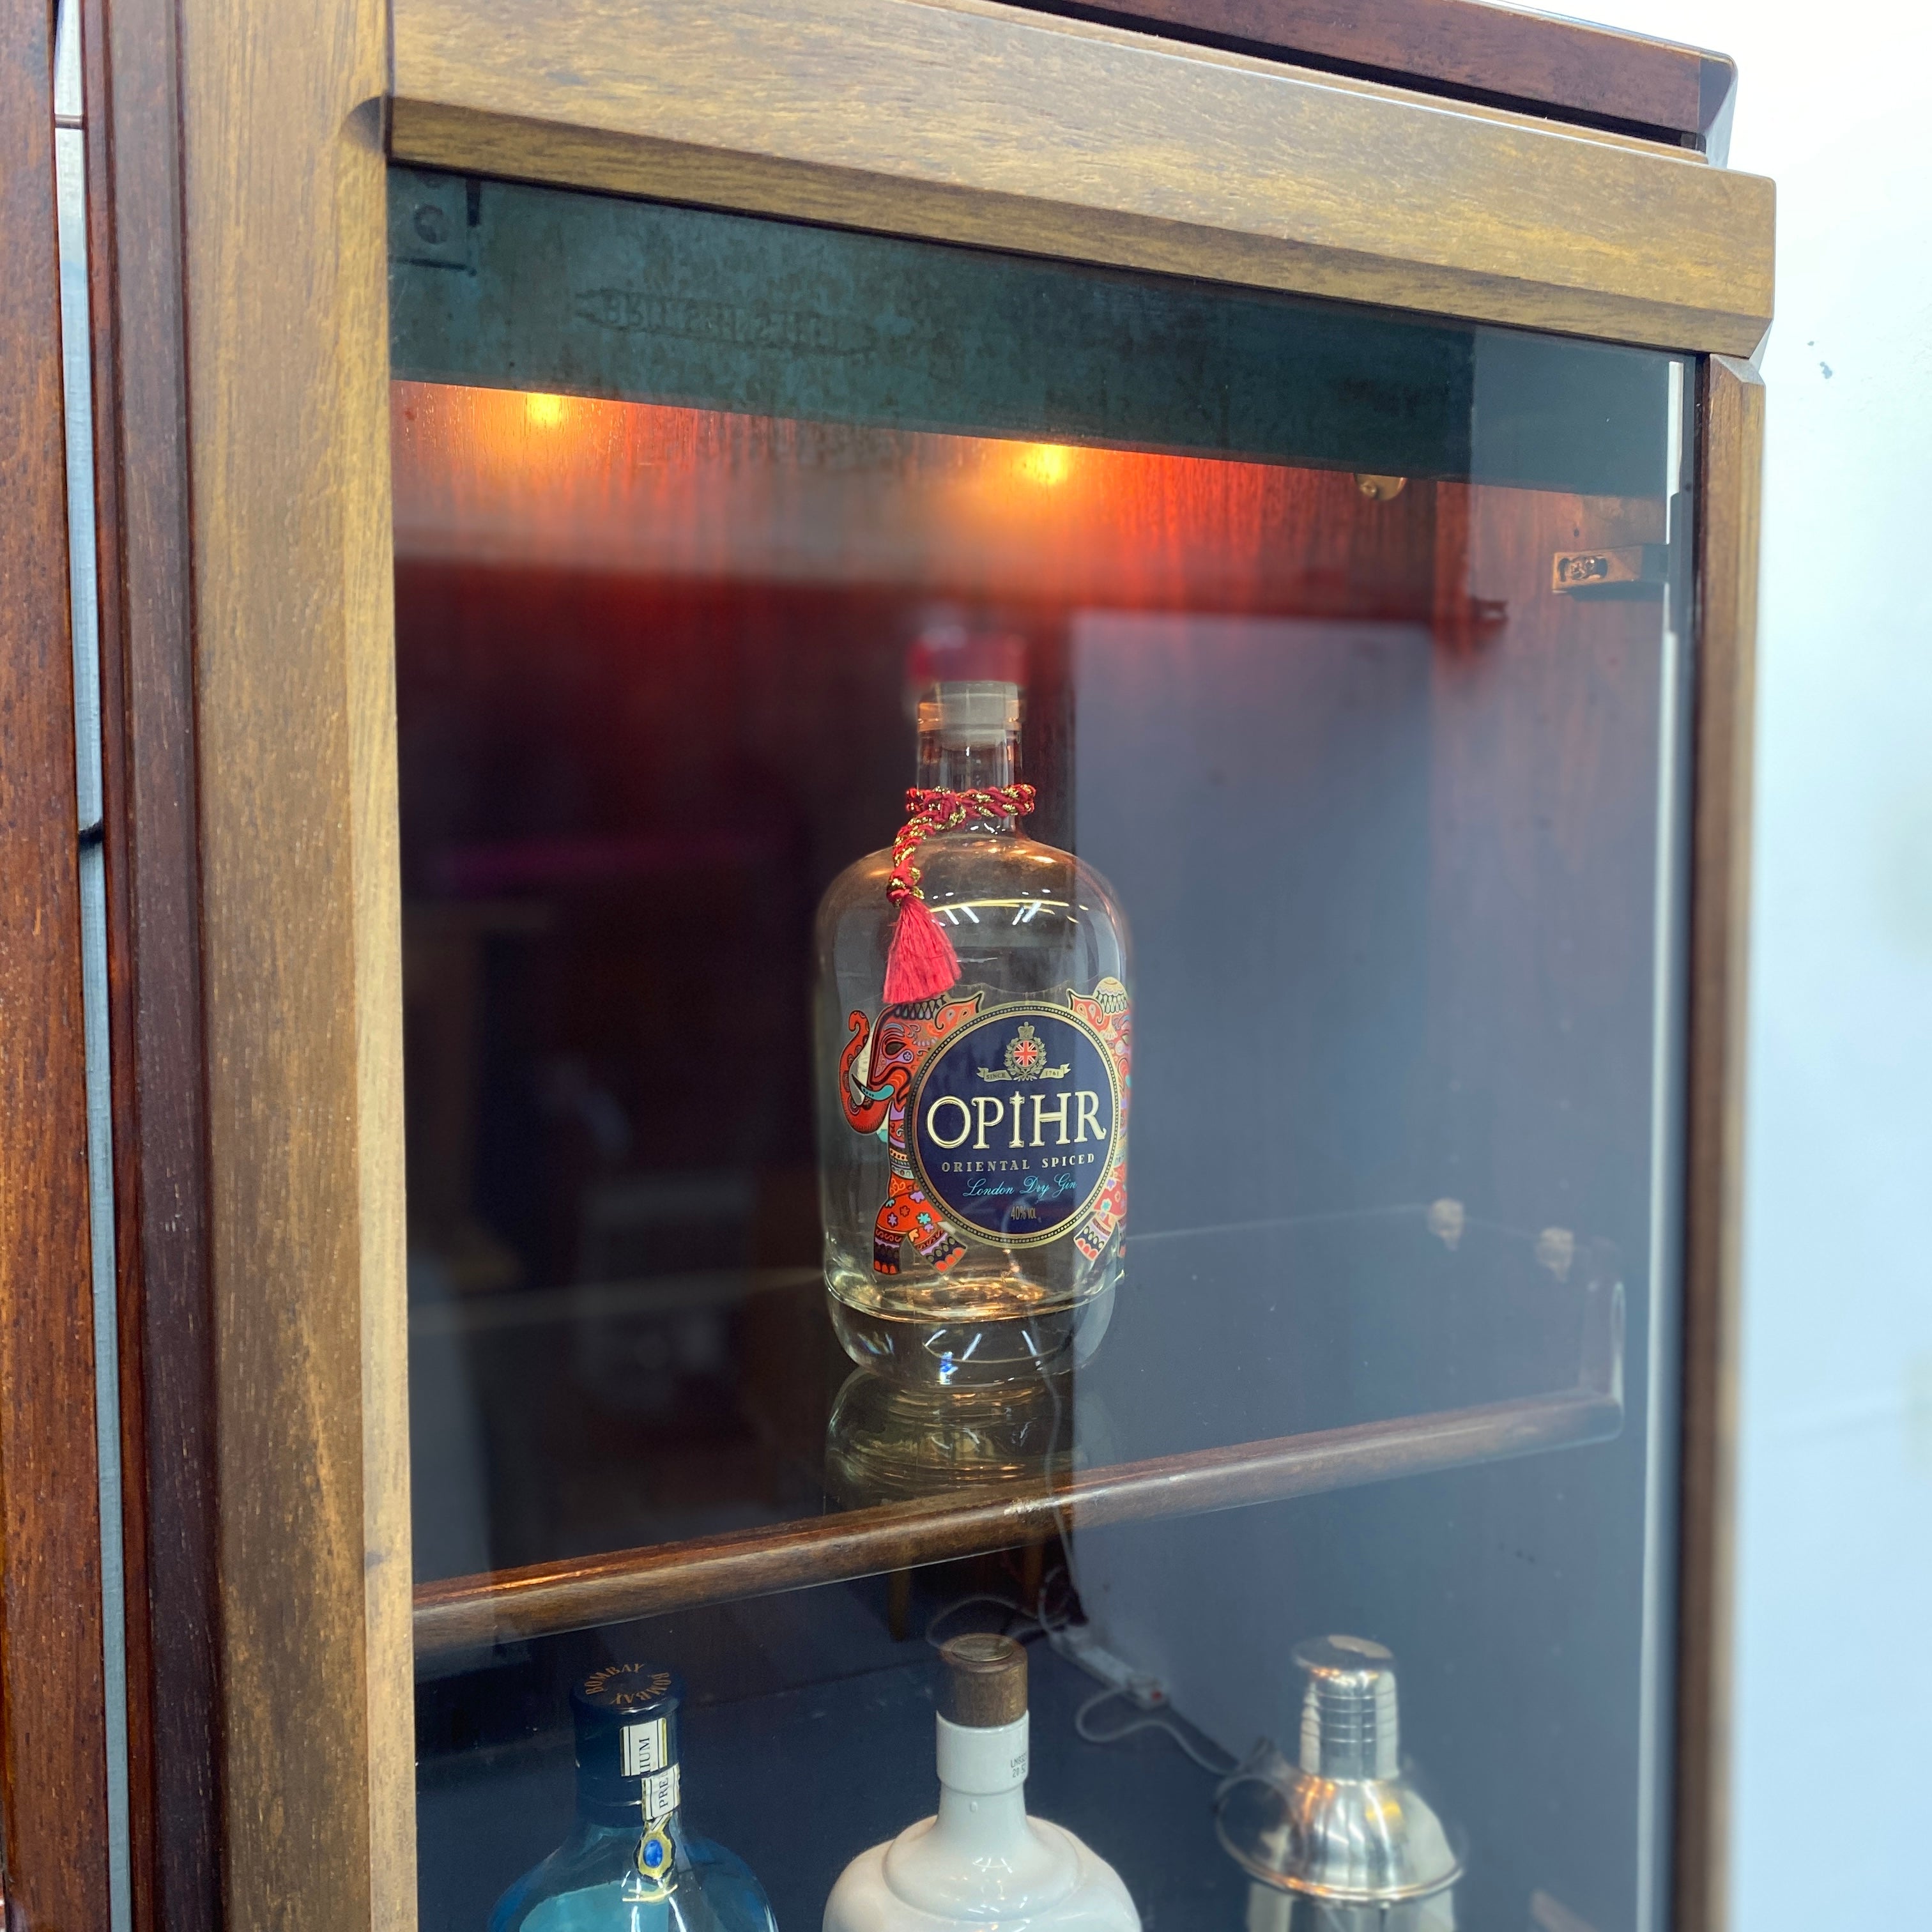 Danish Uldum Cocktail Drinks Storage Cabinet